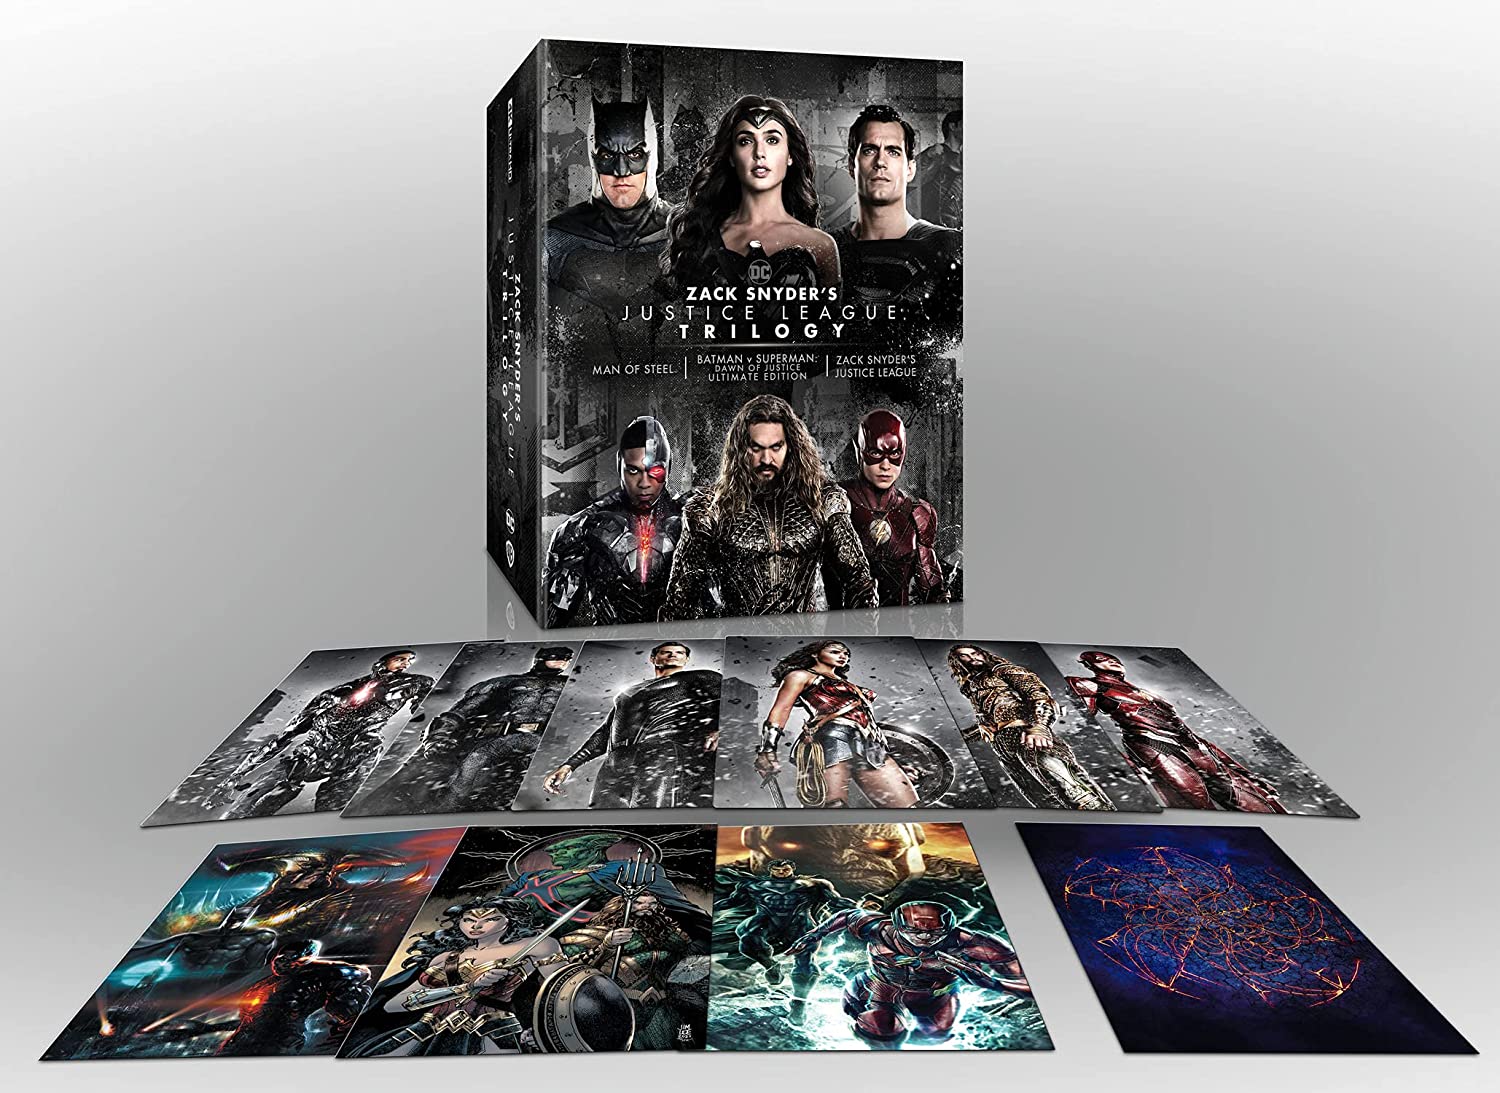 Zack Snyder's Justice League Trilogy box open